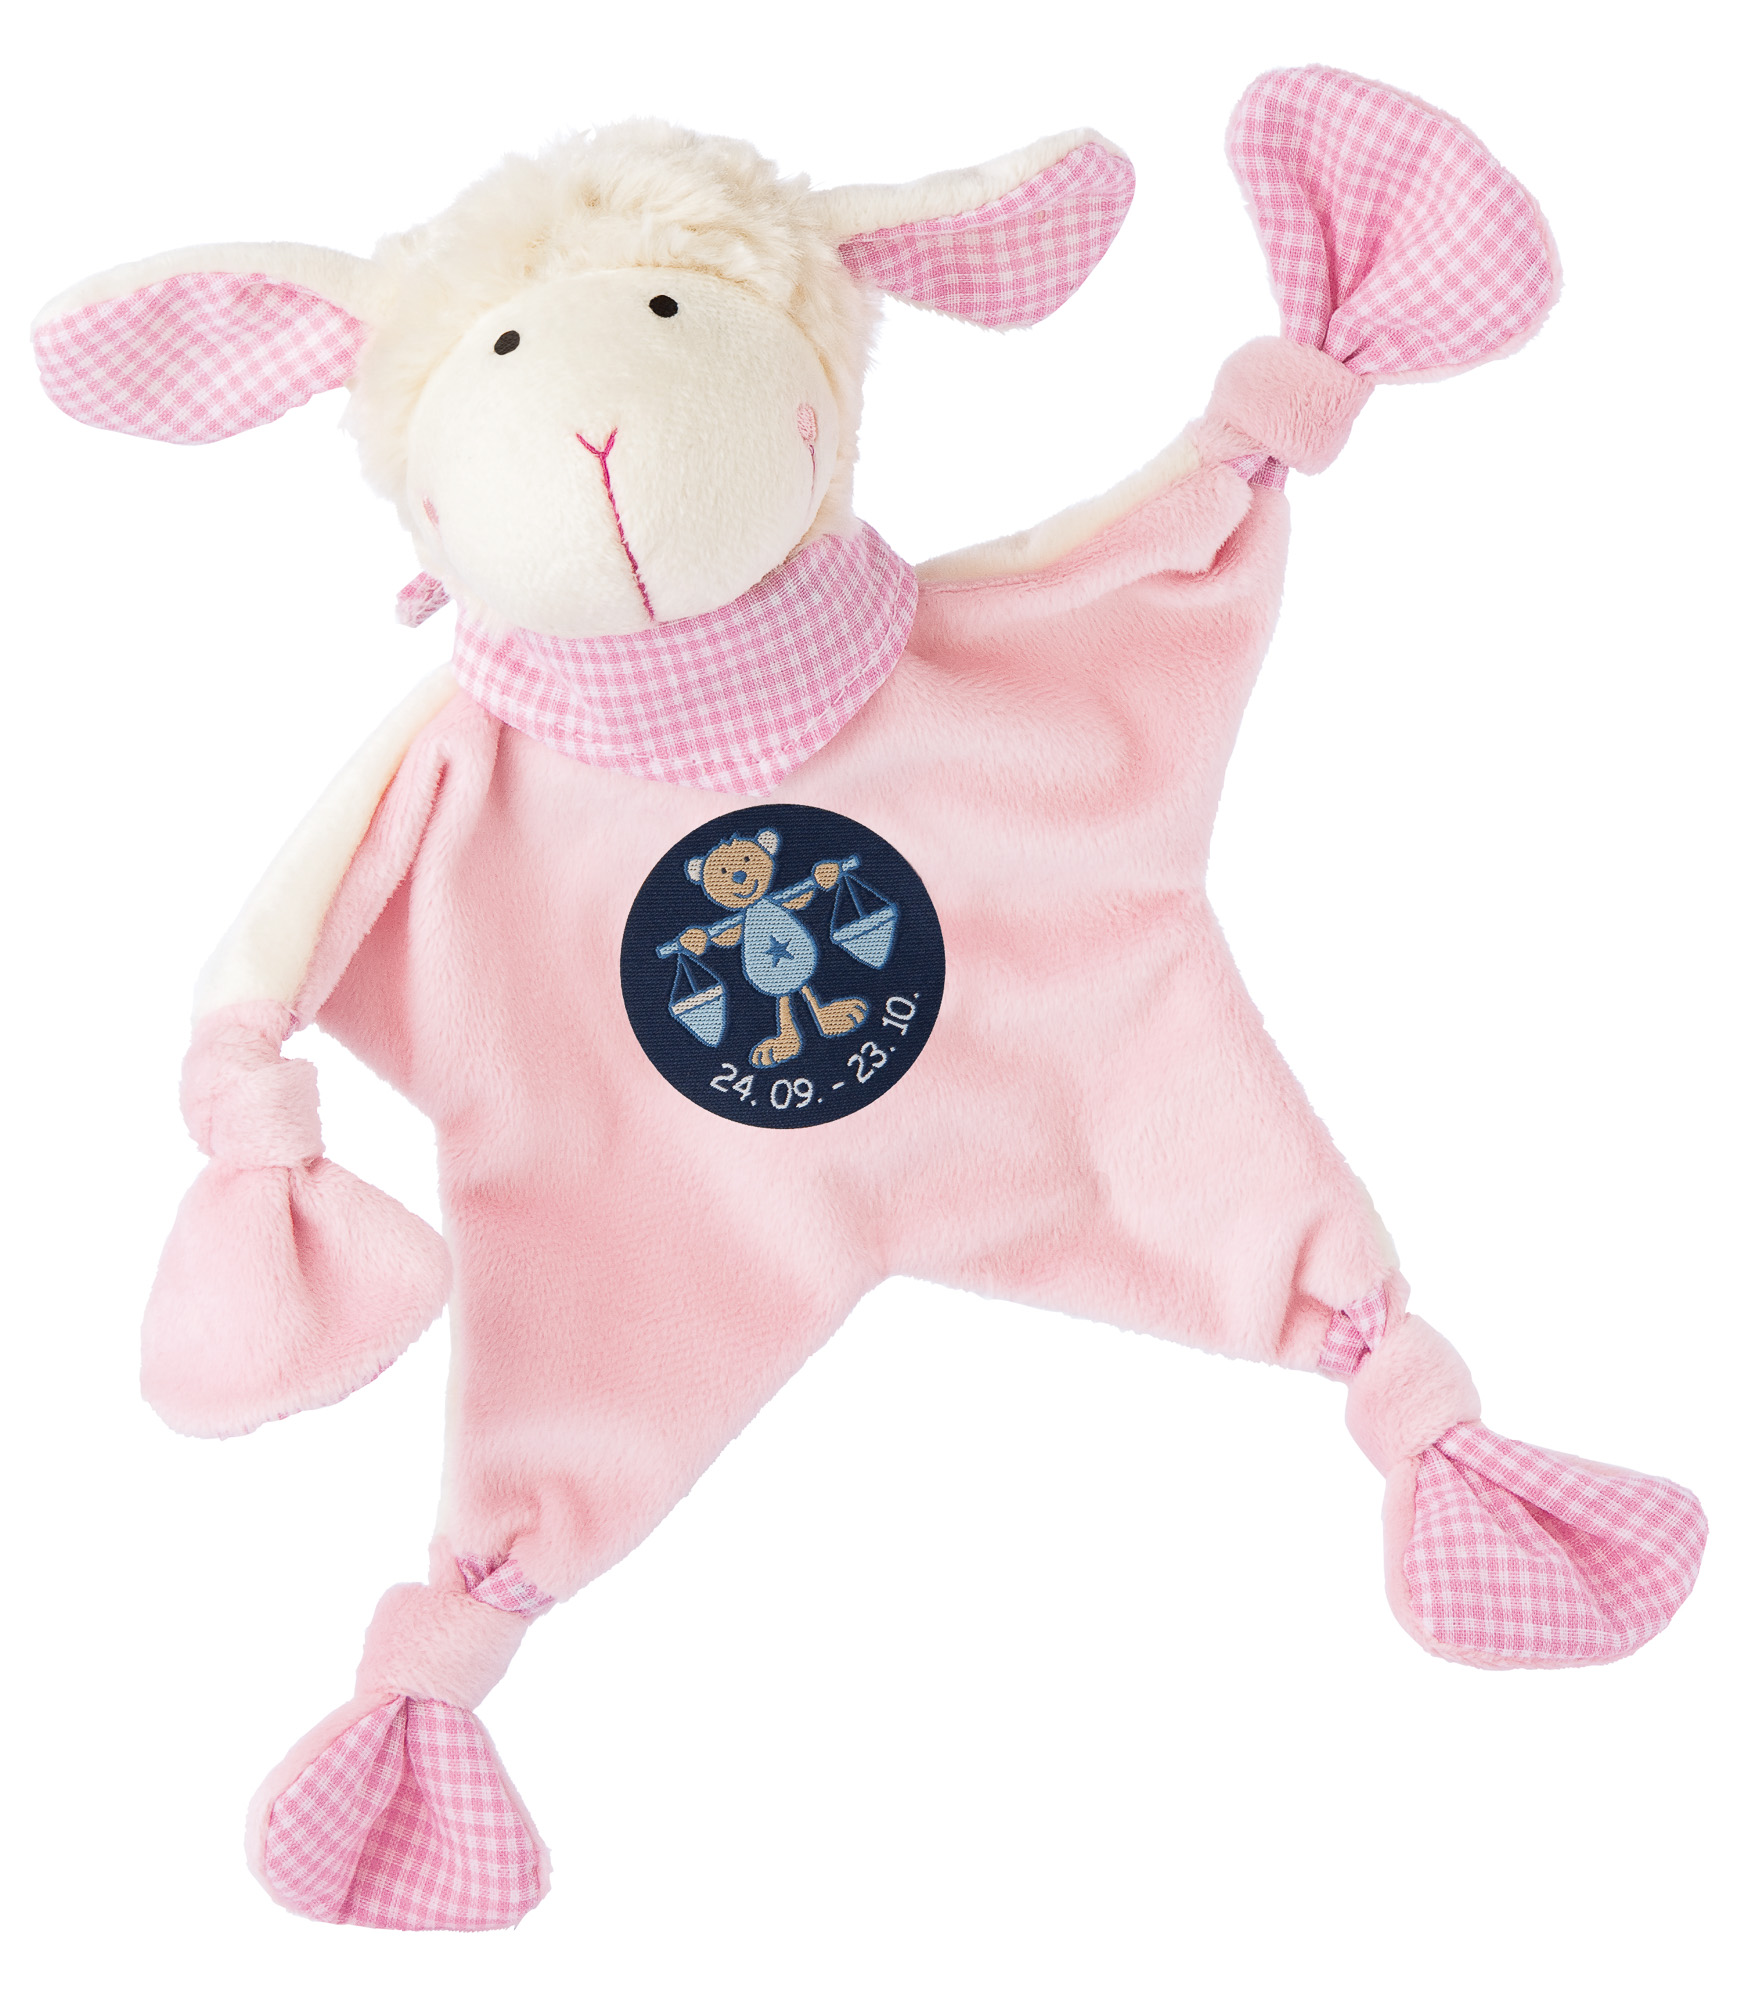 Comforter lamb, zodiac star sign Libra